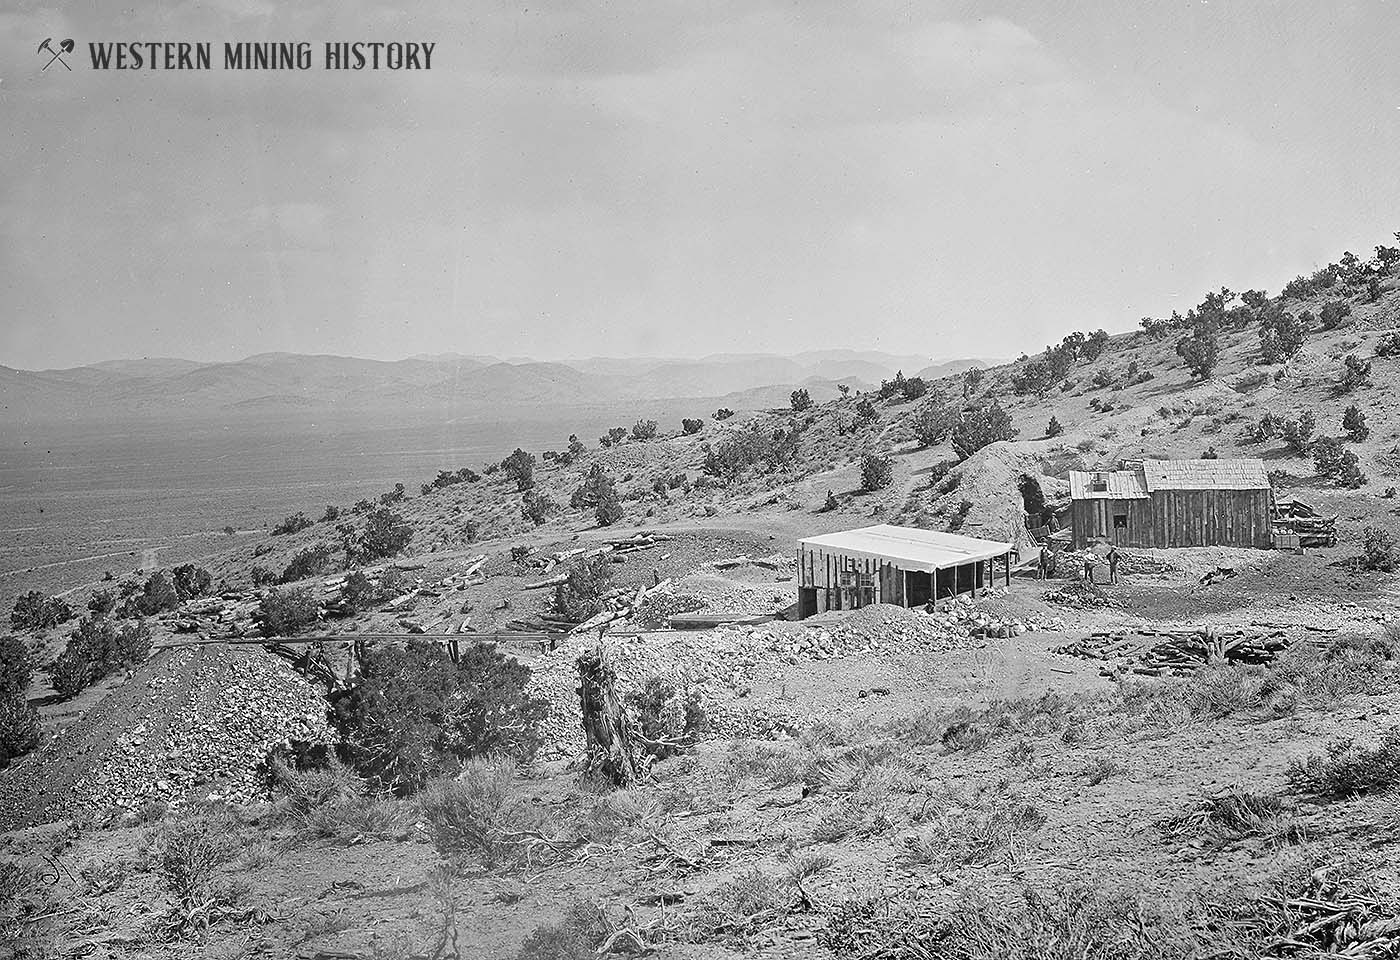 Transylvania No. 1 Mine - Belmont, Nevada 1871